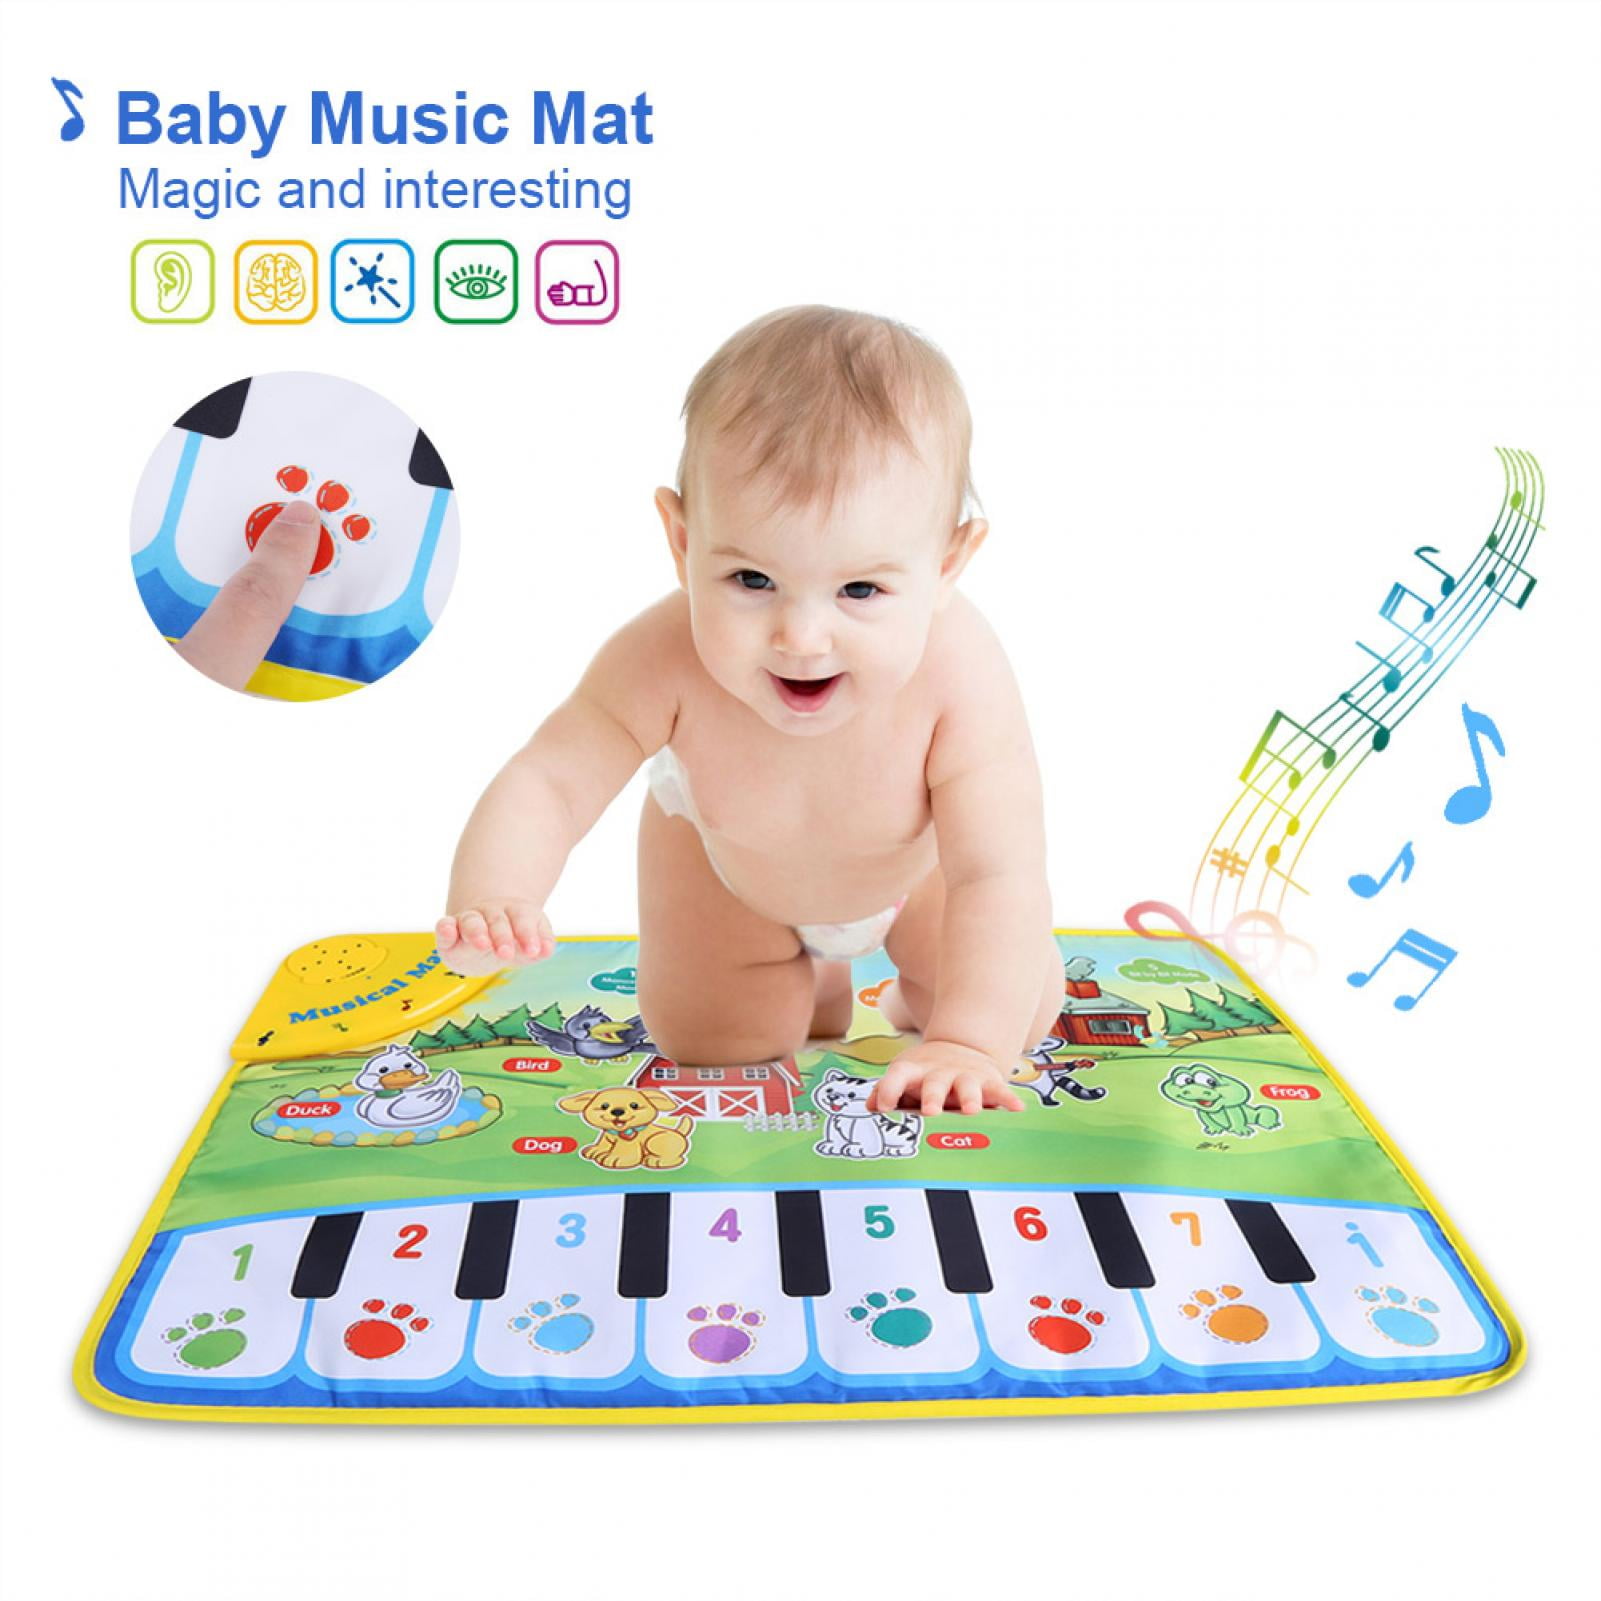 Baby Music Mat Children Crawling Piano Carpet Educational Musical Toy Kids Gift 